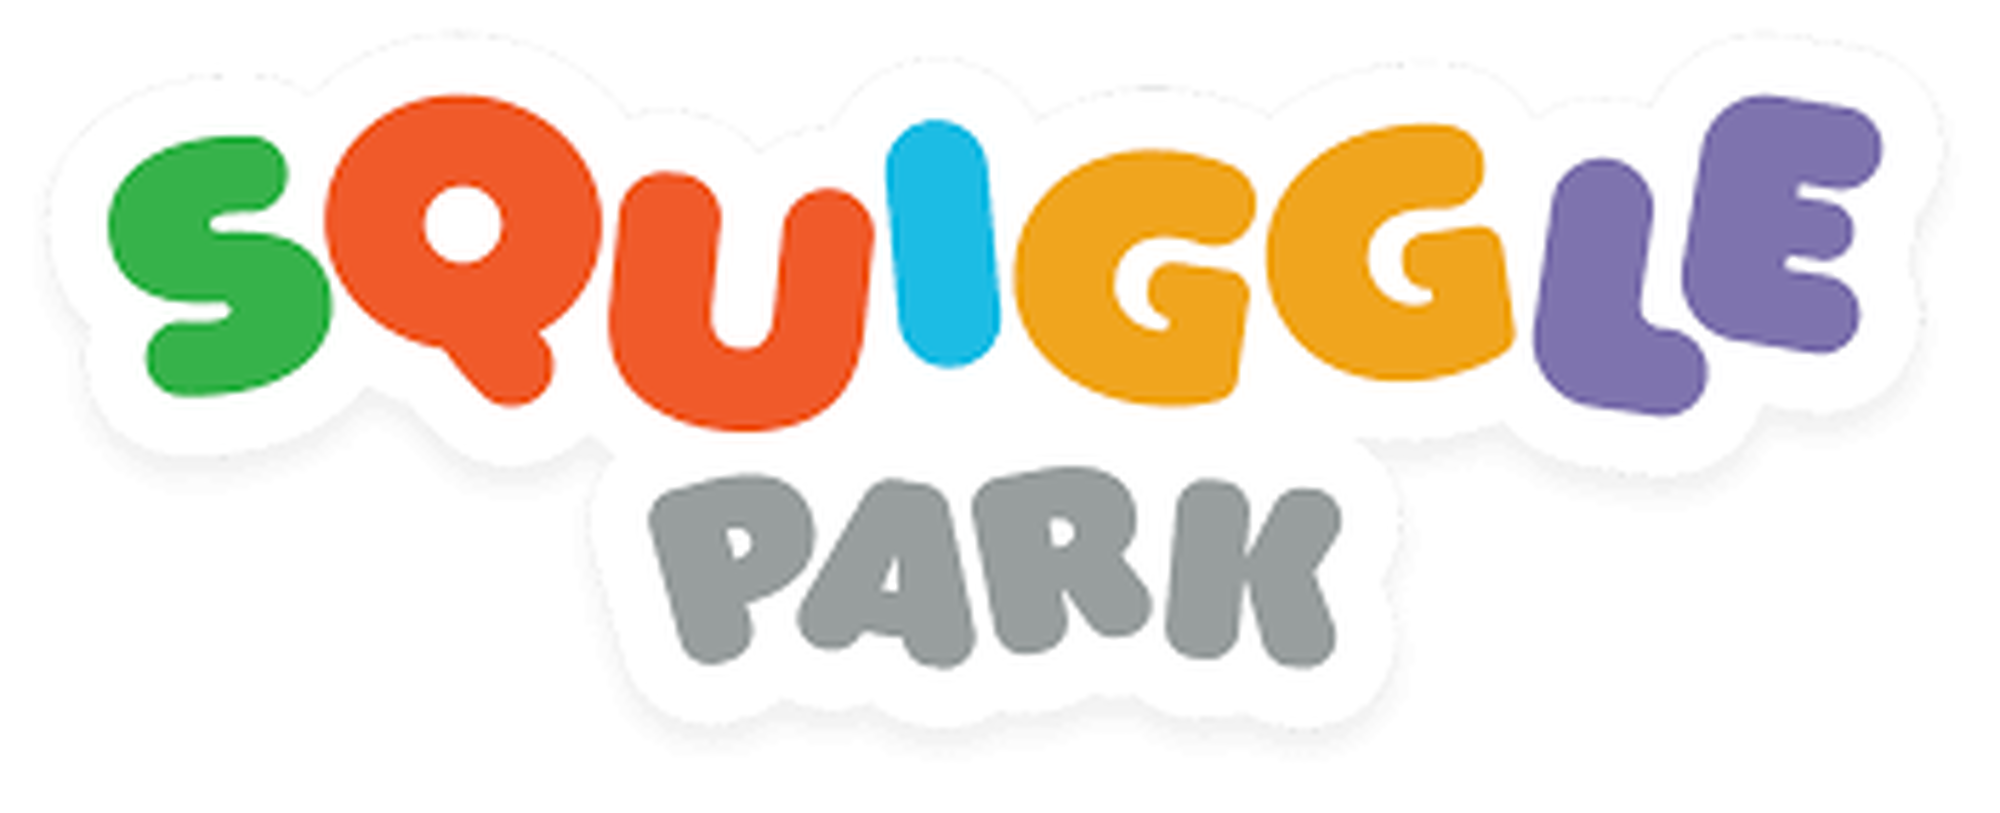 Squiggle Park logo